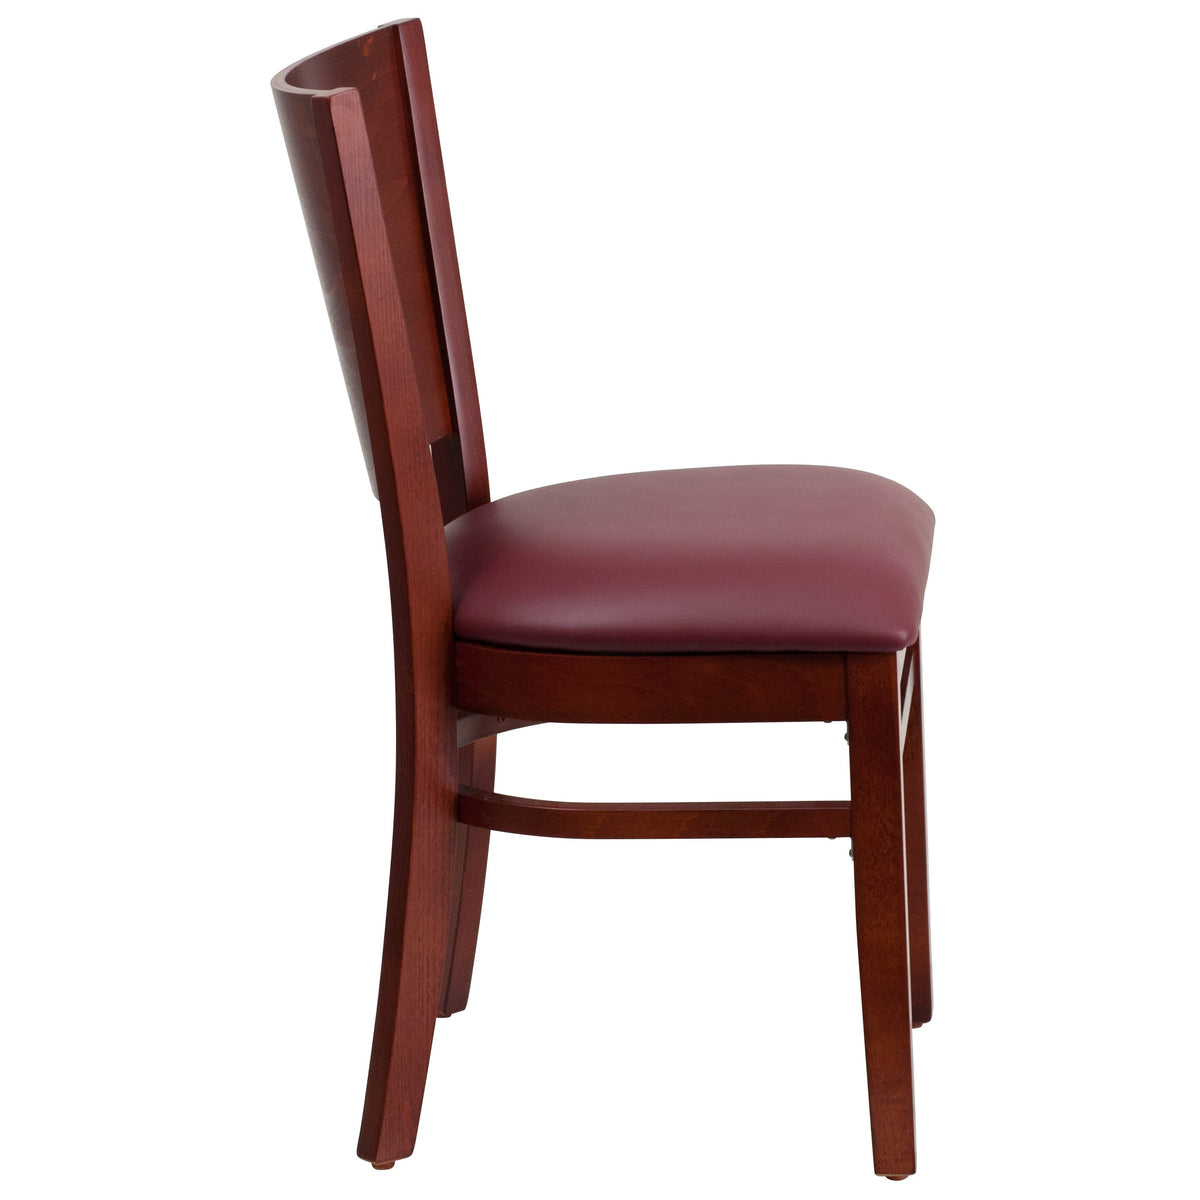 Burgundy Vinyl Seat/Mahogany Wood Frame |#| Solid Back Mahogany Wood Restaurant Chair - Burgundy Vinyl Seat